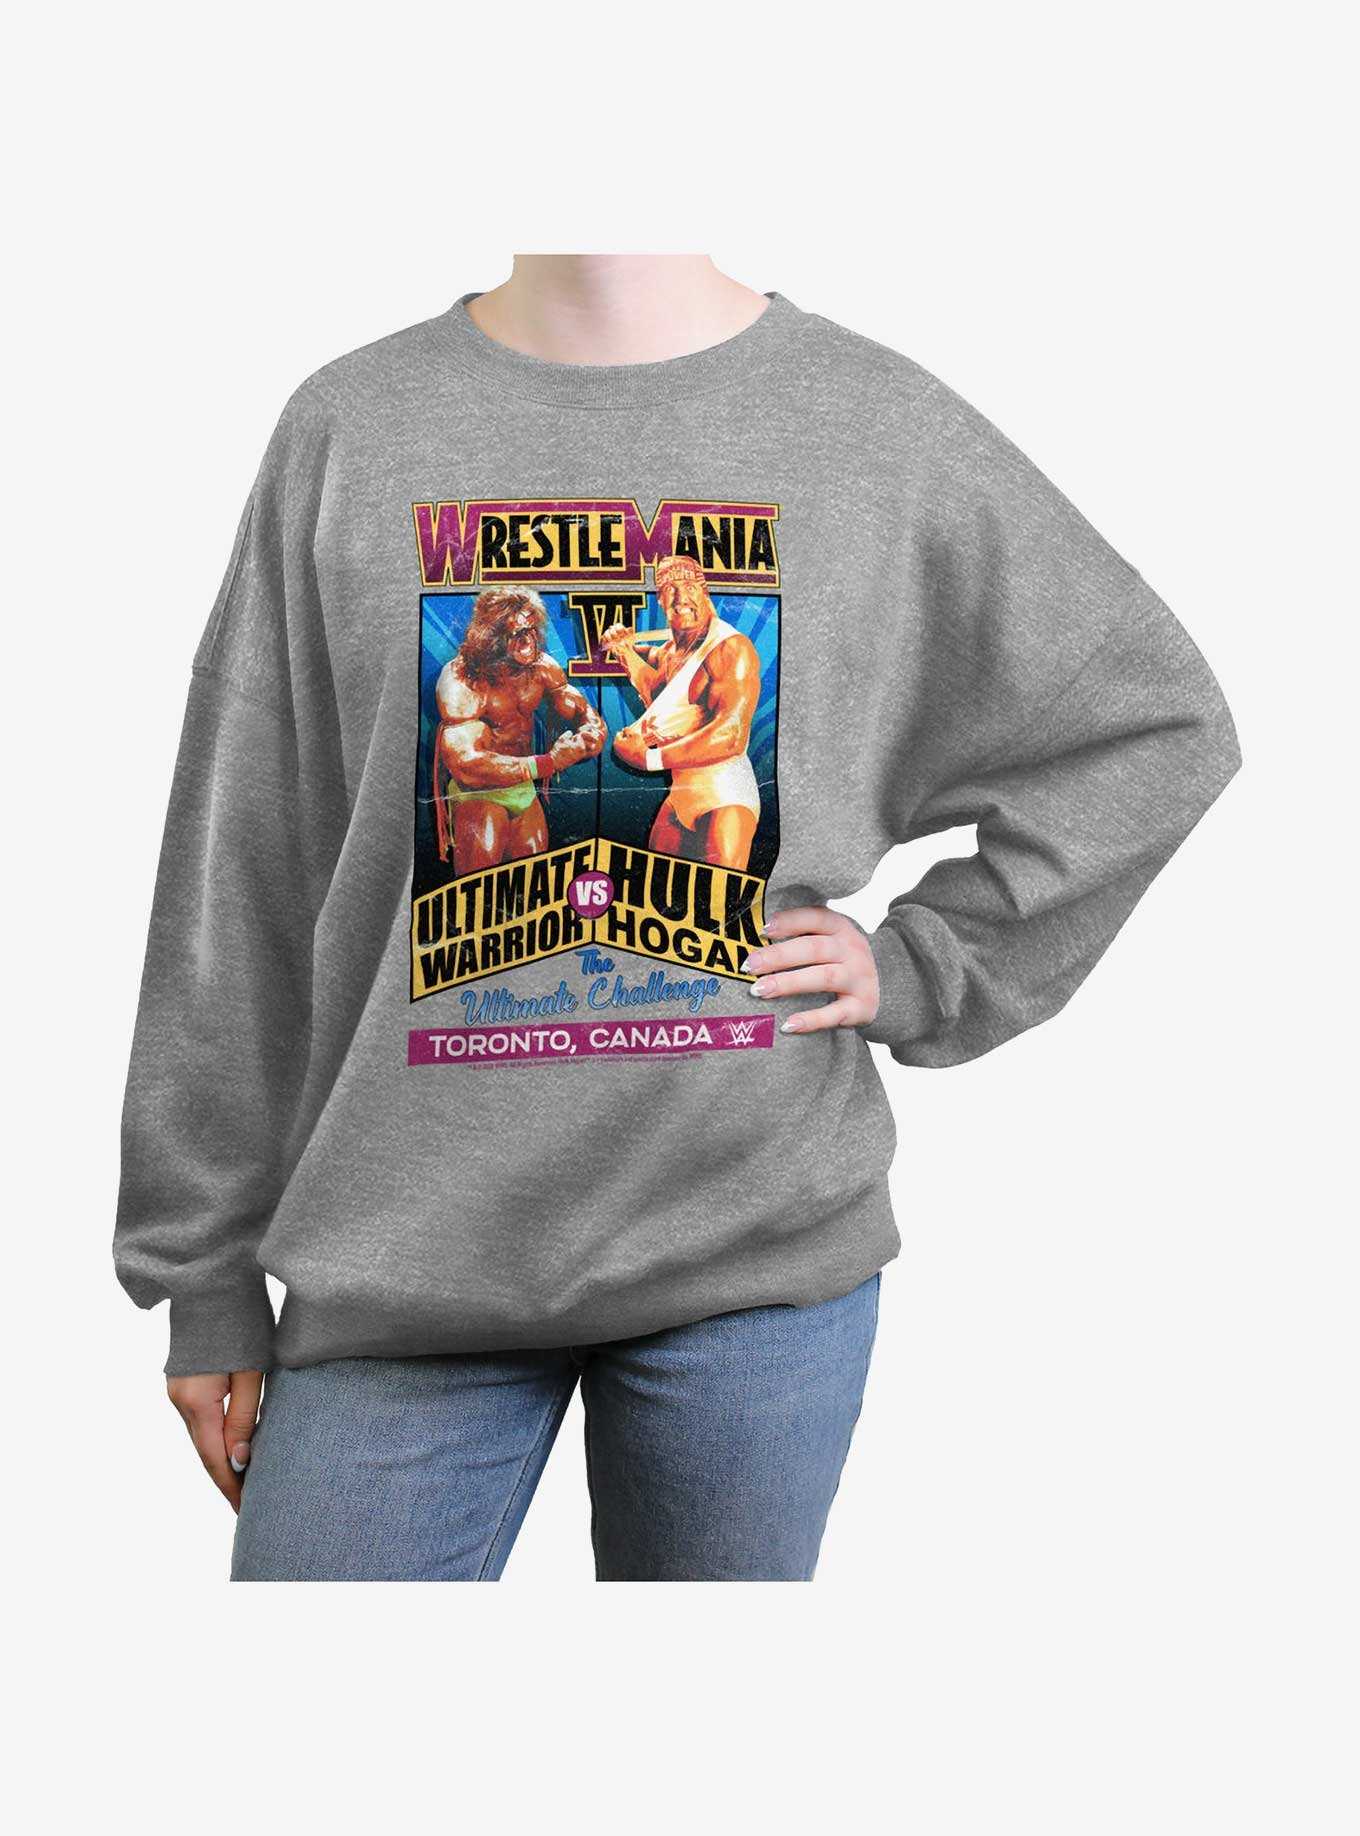 WWE WrestleMania 6 The Ultimate Challenge Ultimate Warrior Vs. Hulk Hogan Girls Oversized Sweatshirt, , hi-res